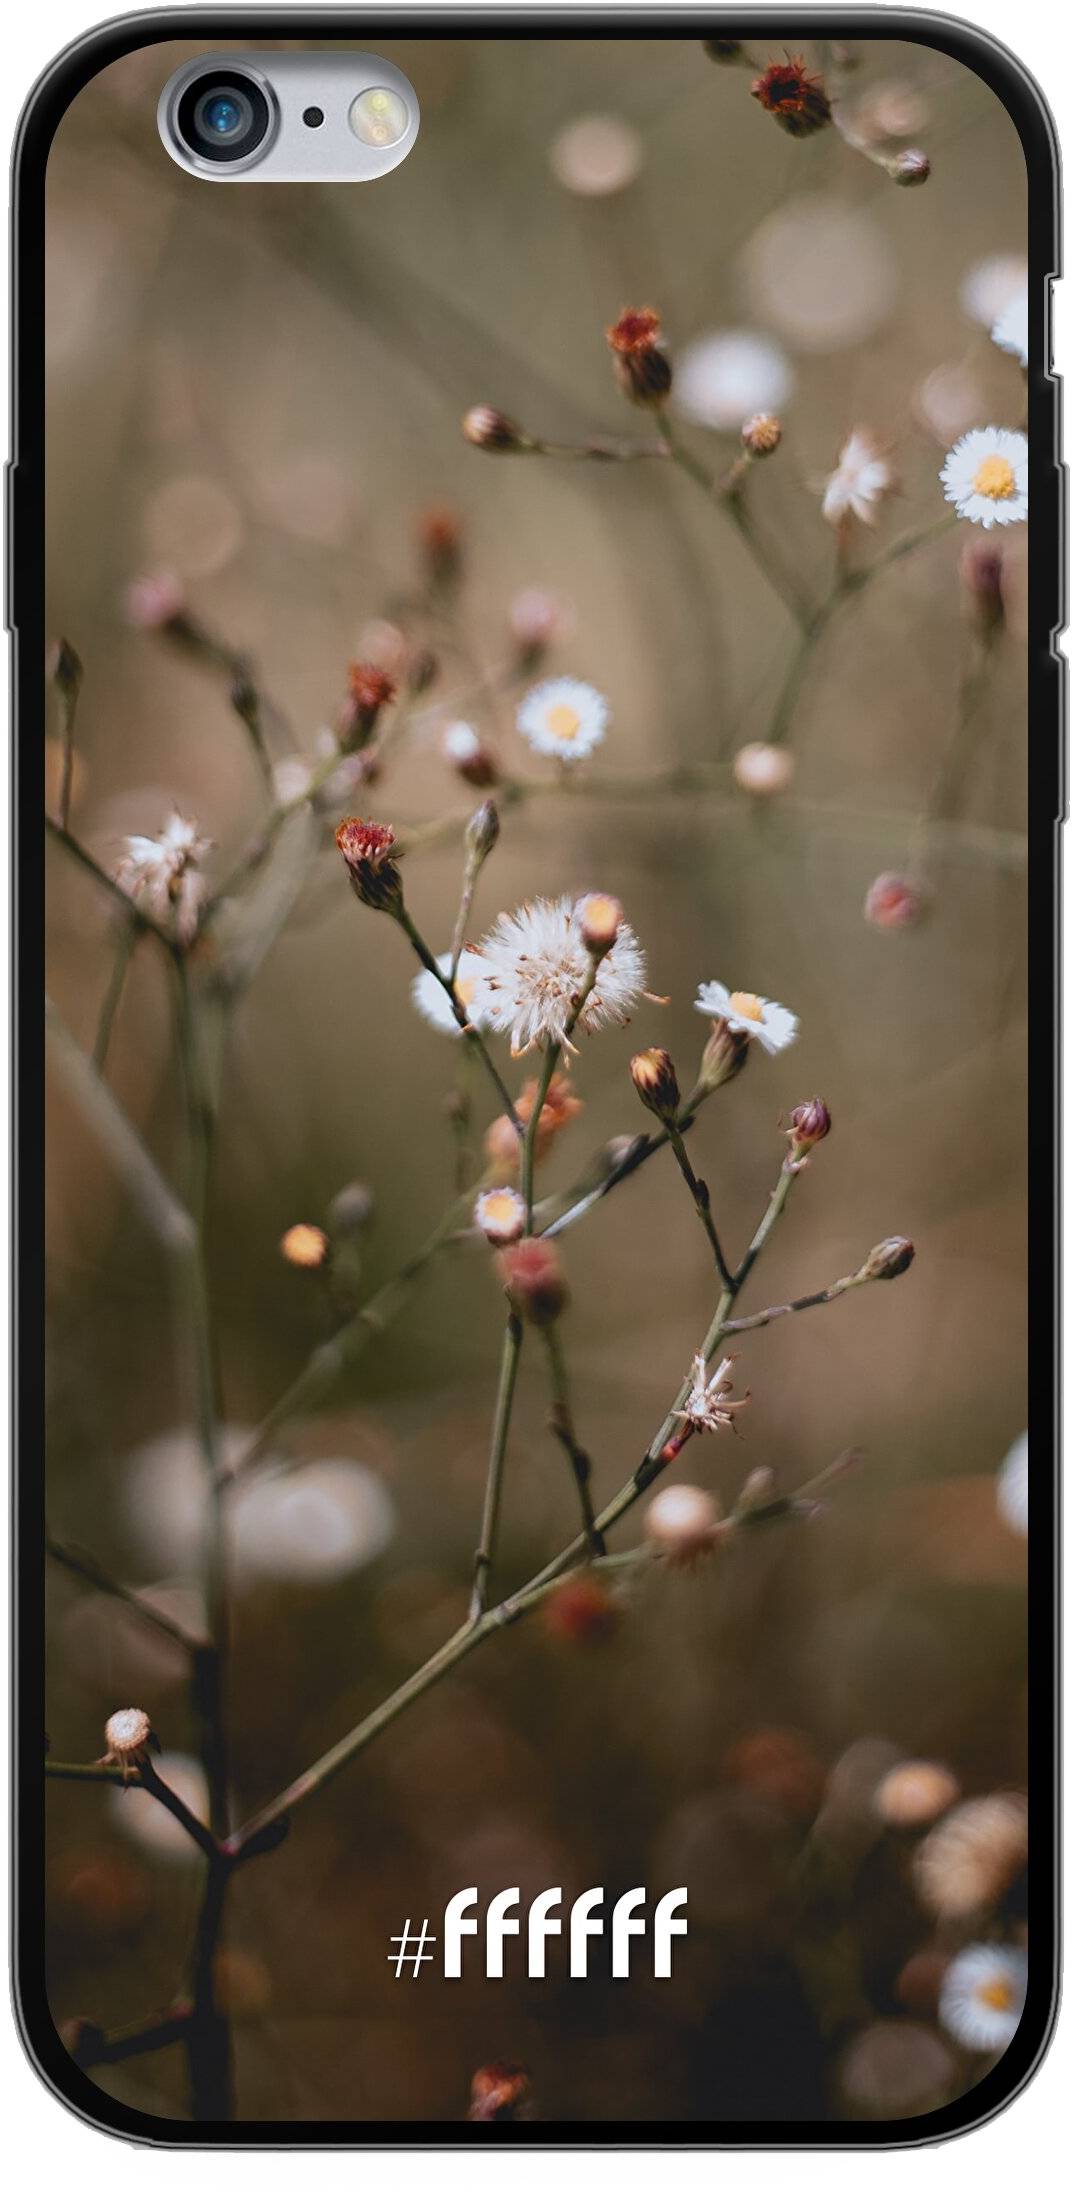 Flower Buds iPhone 6